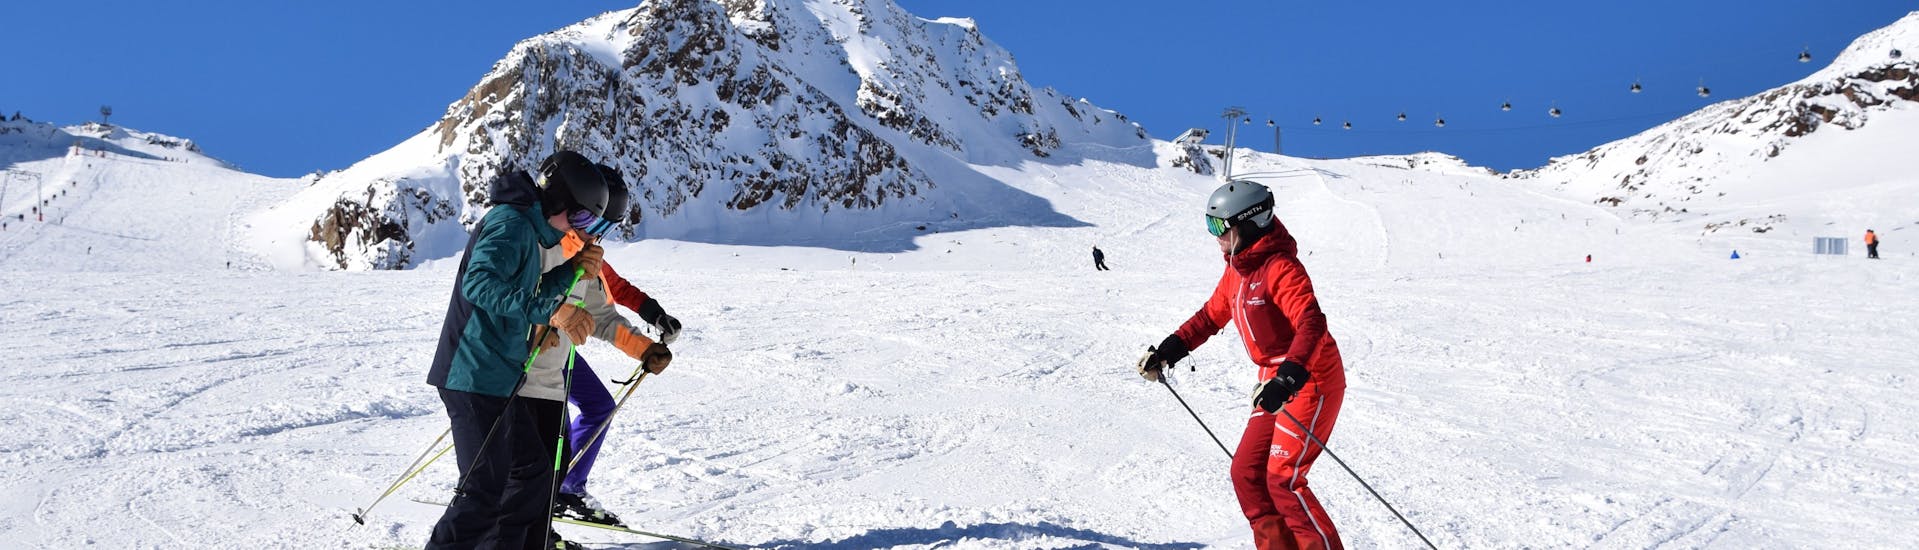 Clases de esquí para adultos a partir de 15 años para debutantes.